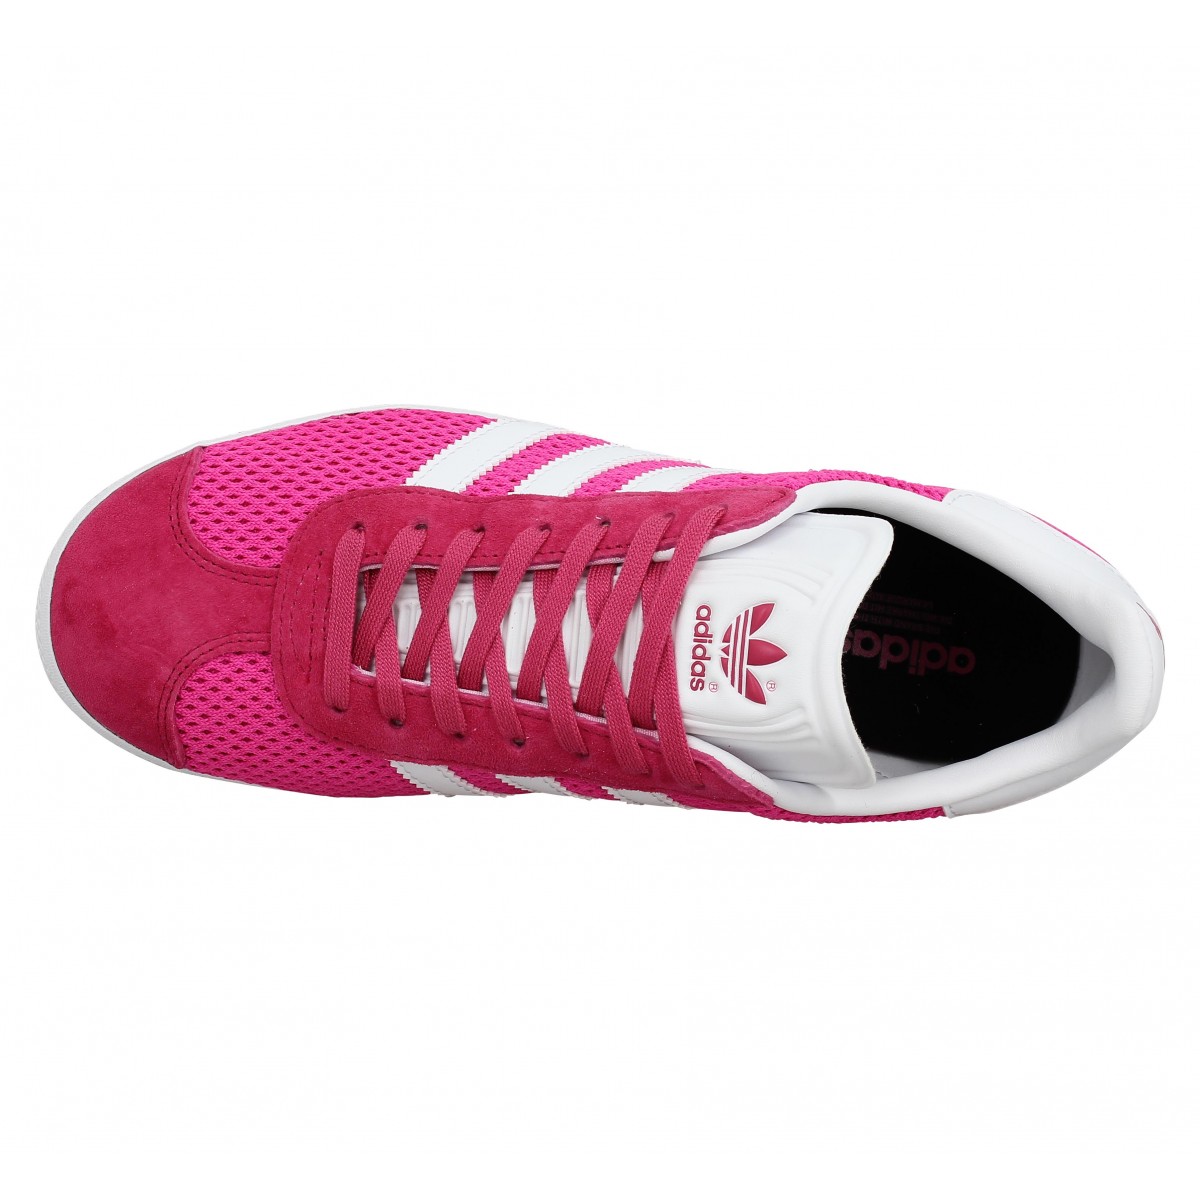 Chaussures Adidas gazelle knit femme rose femme | Fanny chaussures